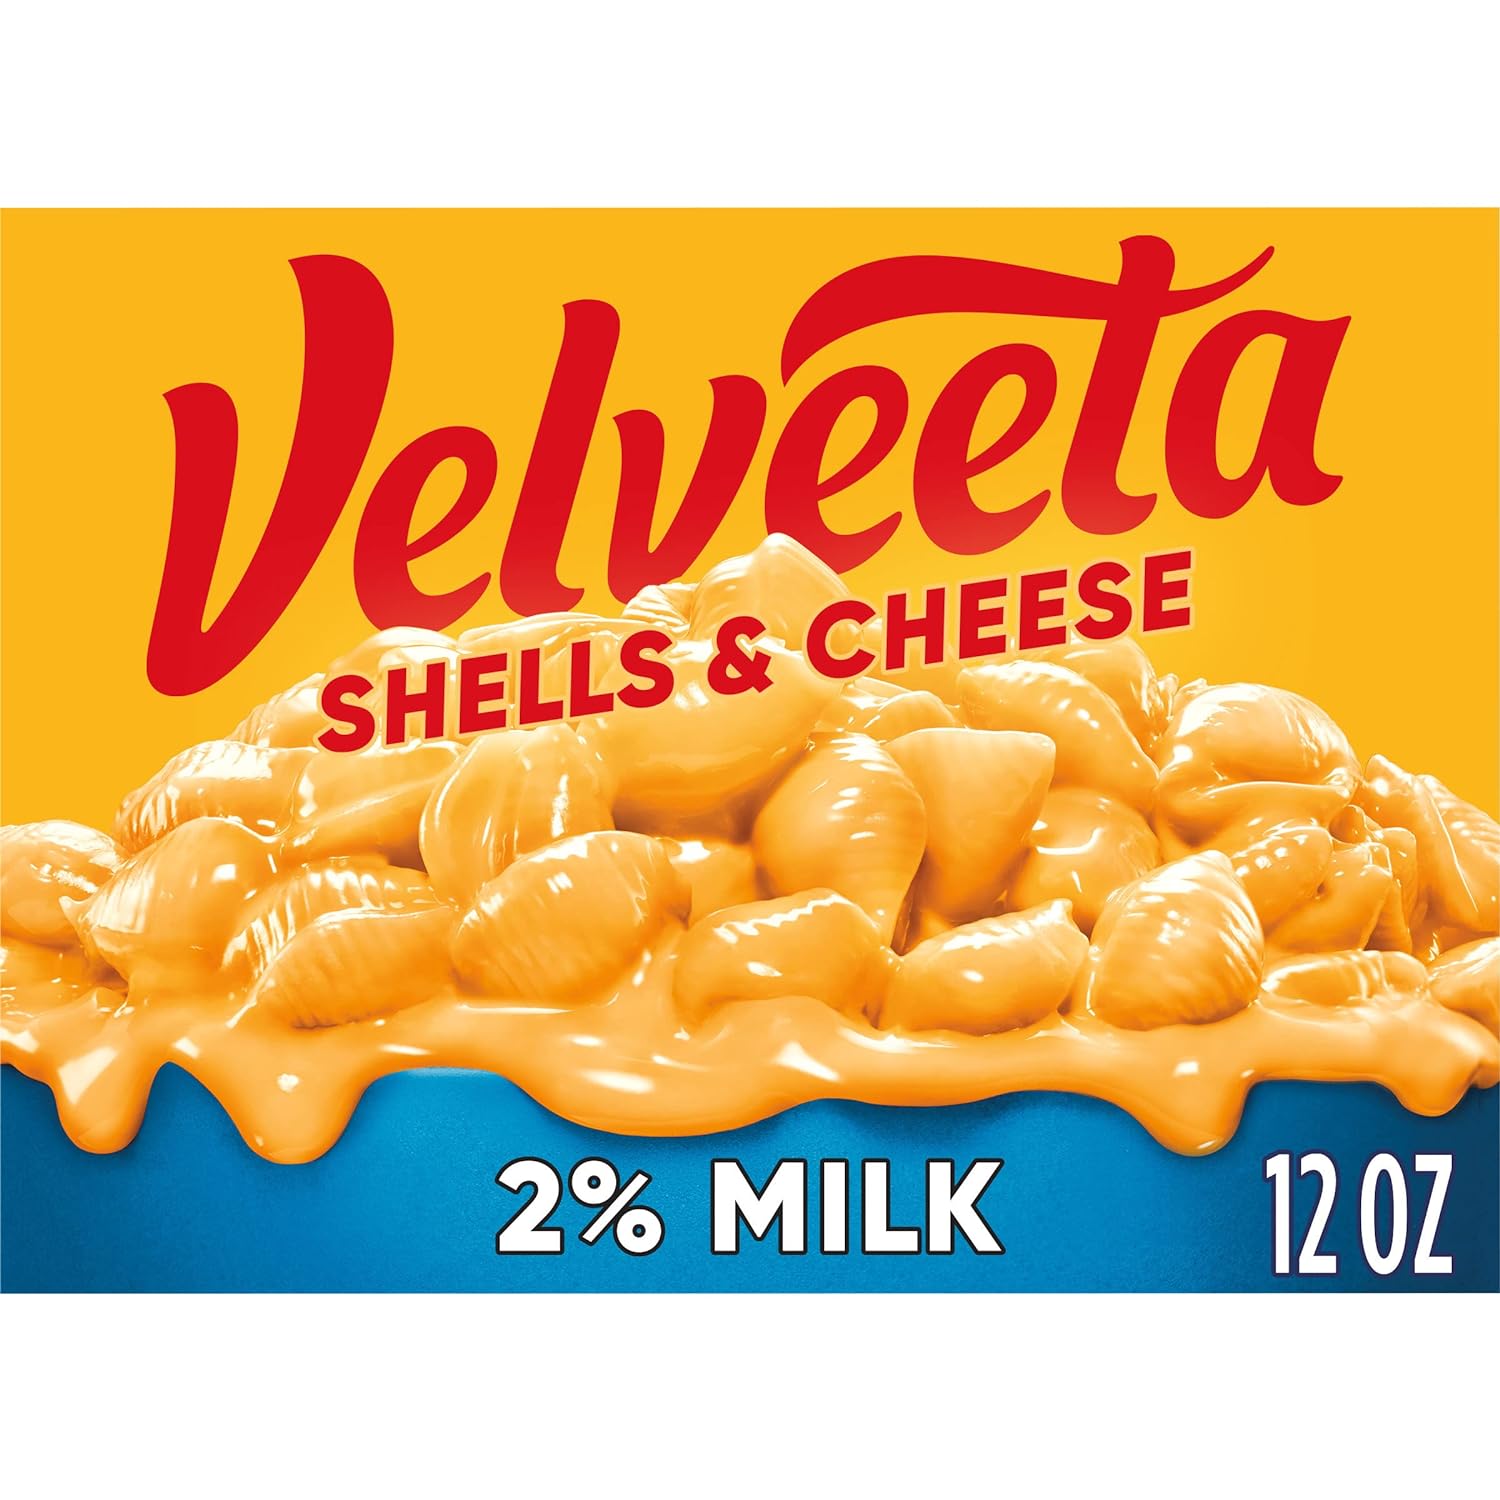 Velveeta Shells & Cheese Pasta with Cheese Sauce & 2% Milk Cheese Meal (12 oz Box)